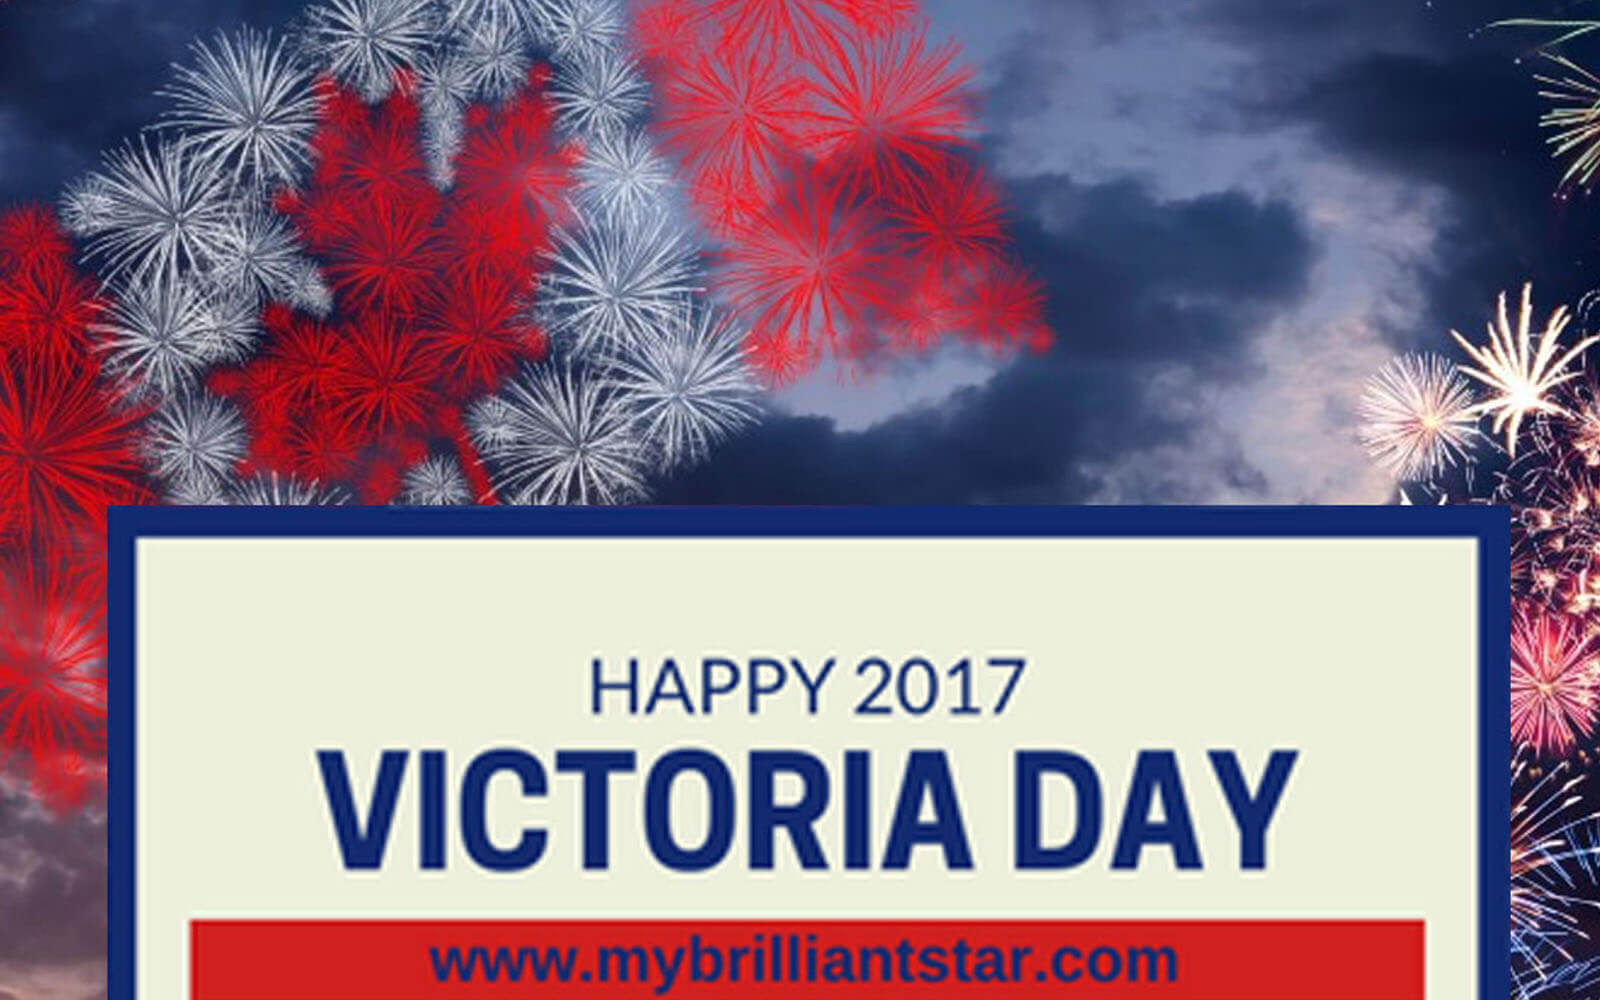 Happy Victoria Day 2017